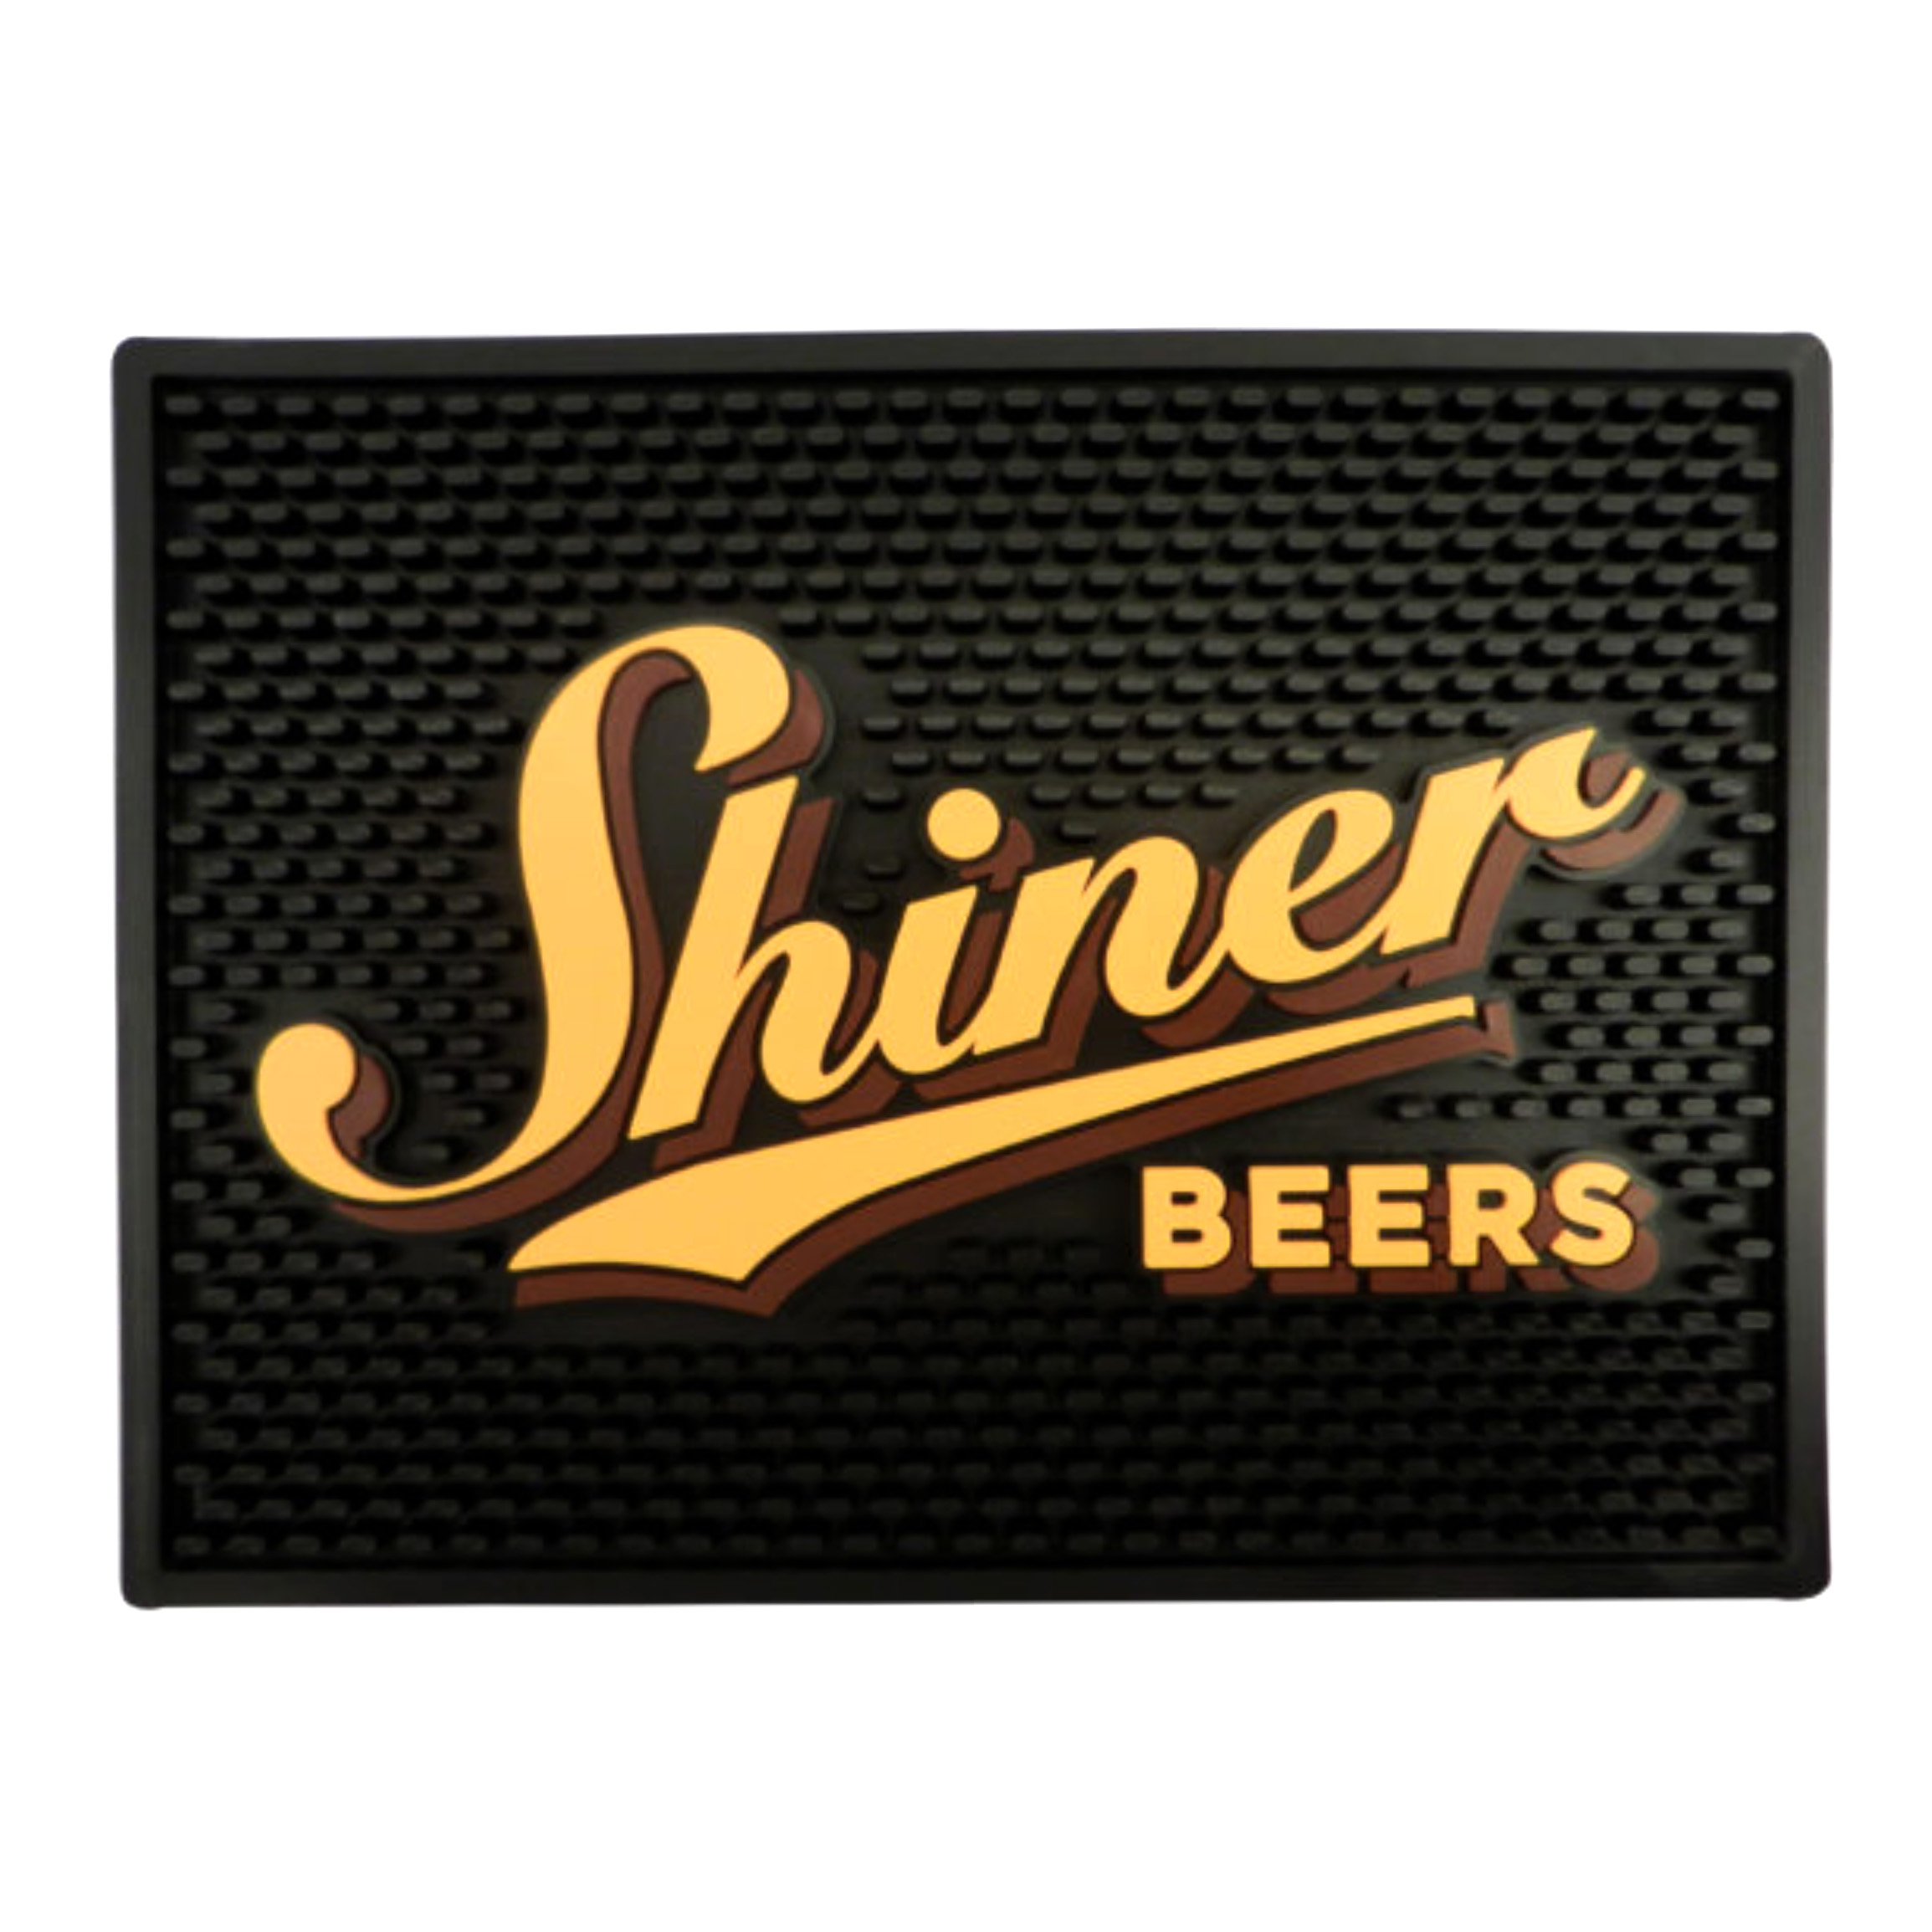 Shiner Beers Counter Mat